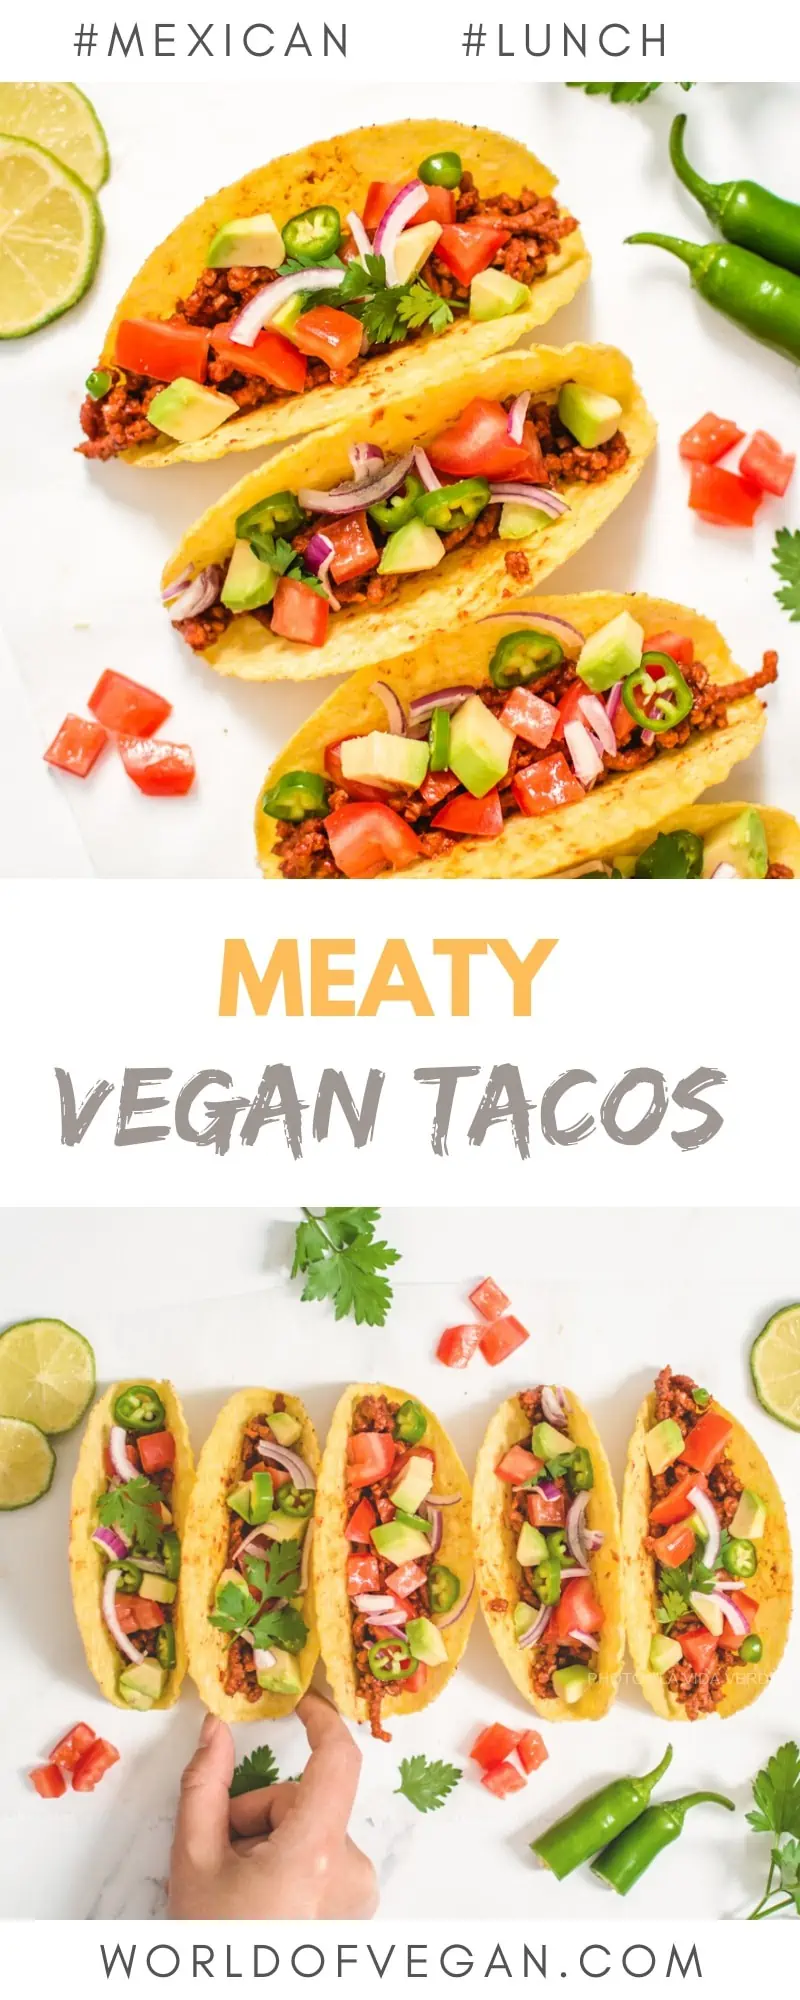 Meaty Vegan Tacos | World of Vegan | #tacos #vegan #mexican #healthy #lunch #recipe #worldofvegan